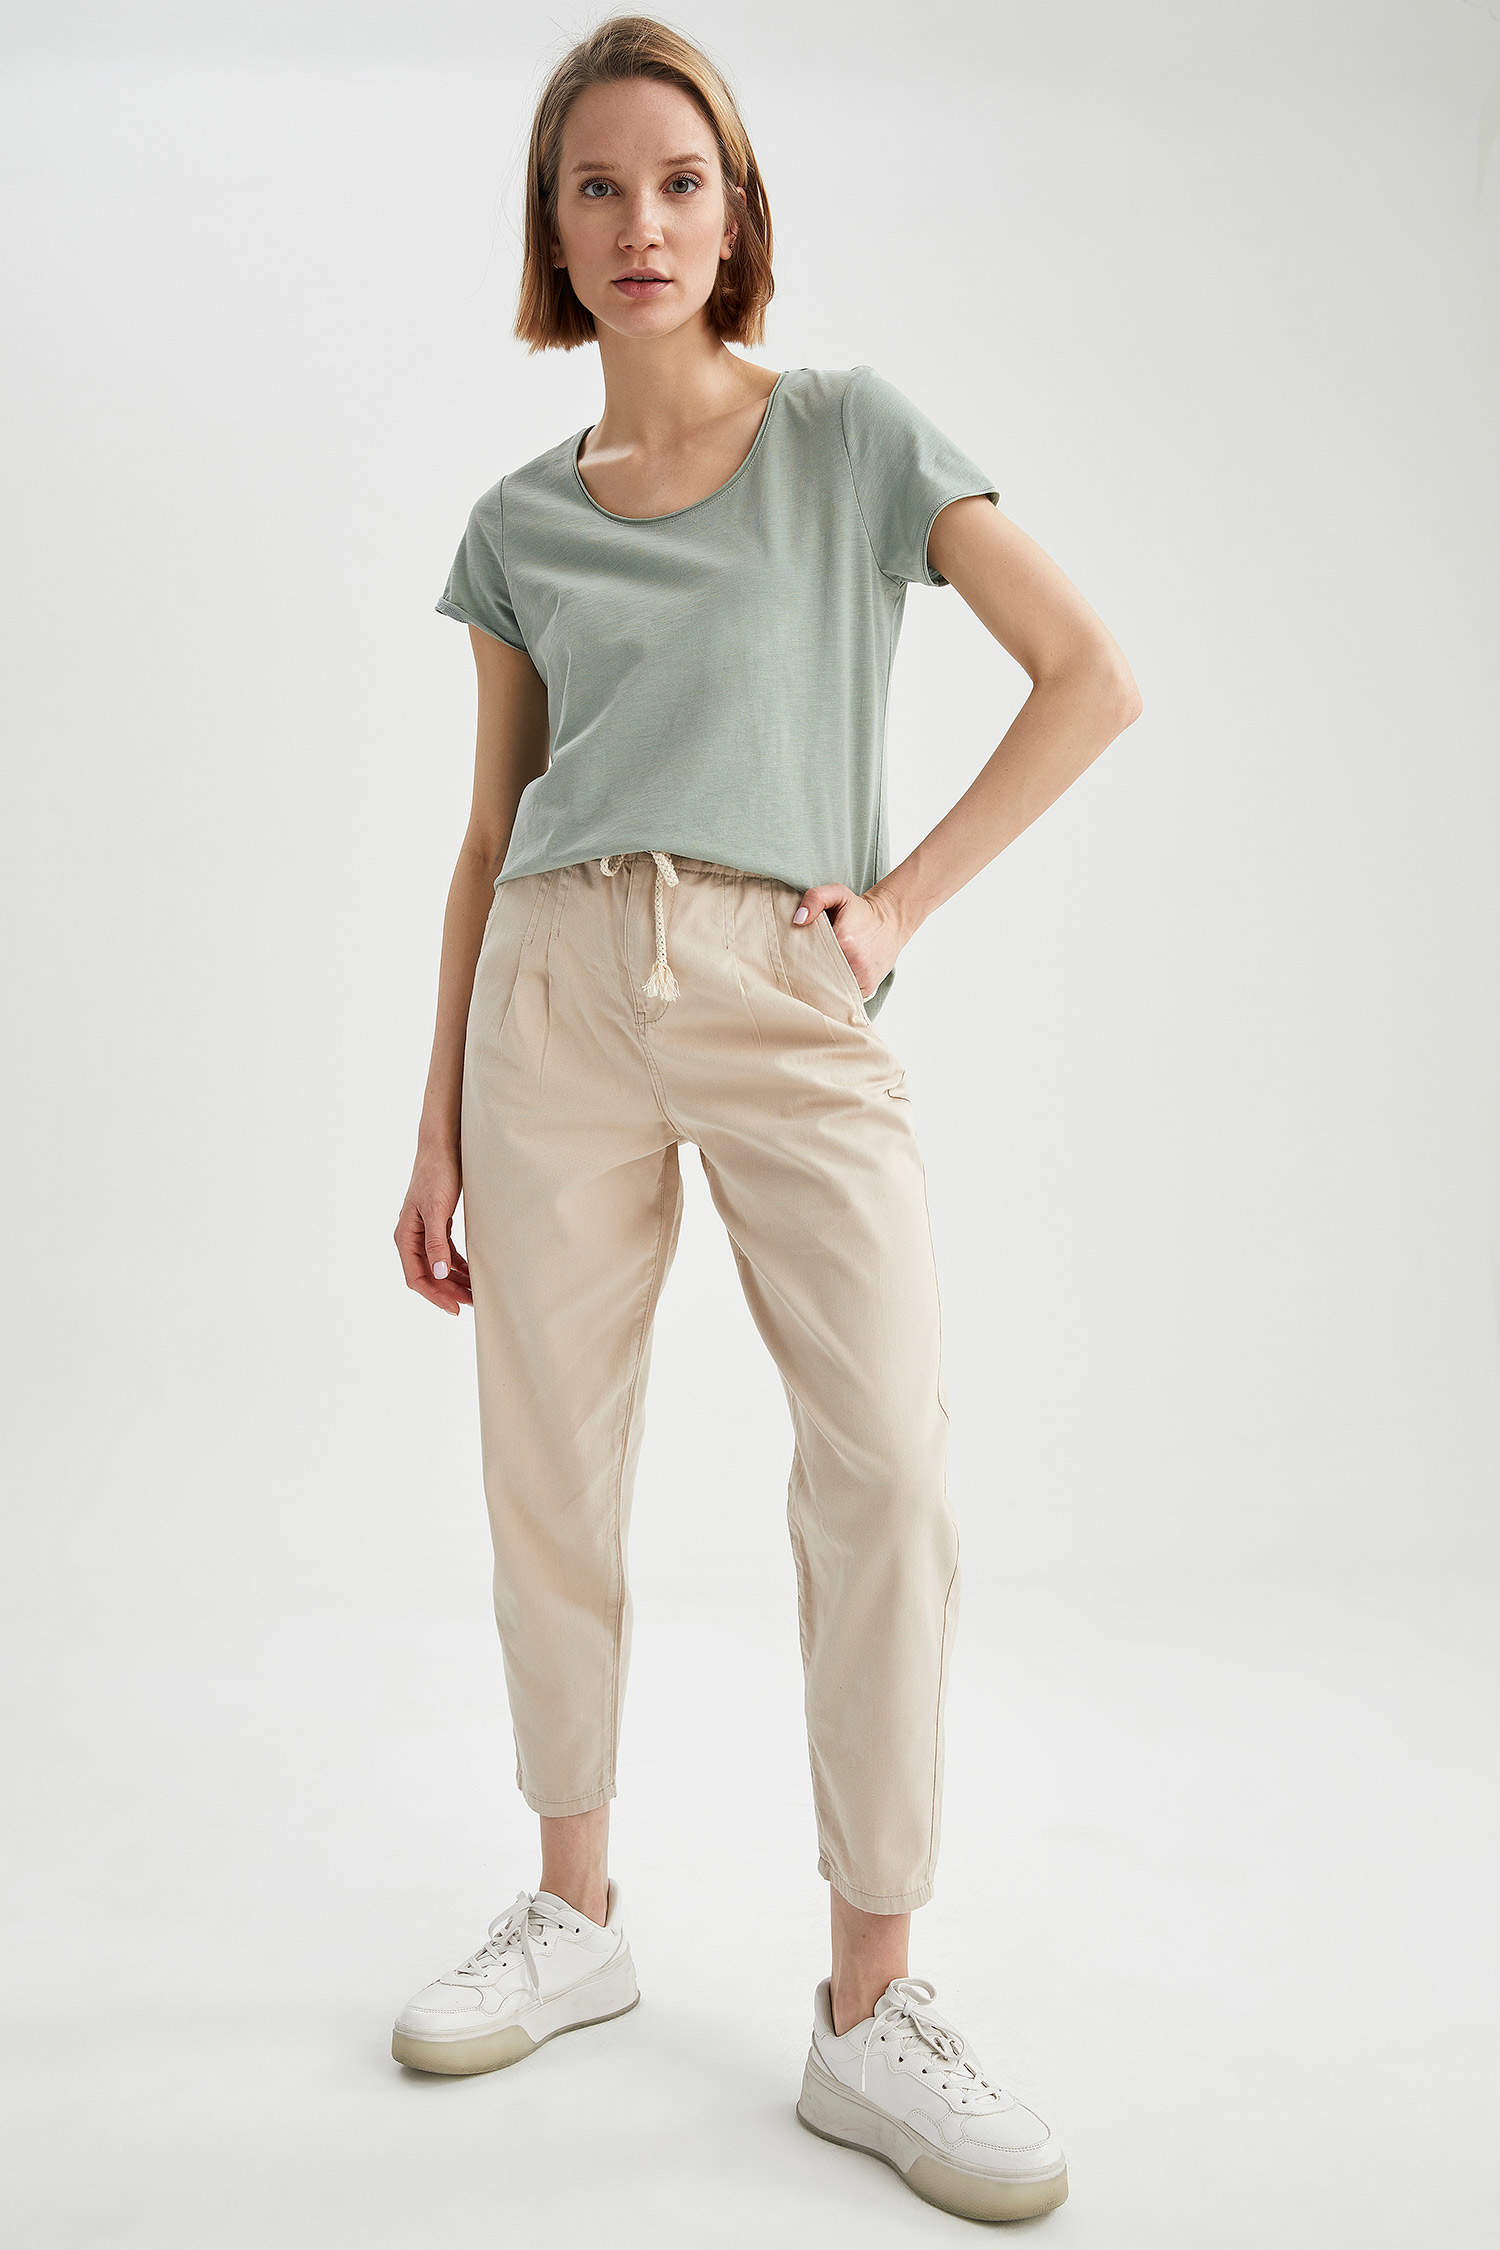 Turquoise WOMAN Short-Sleeved Regular Fit C-Neck Plain T-Shirt 1844402 ...